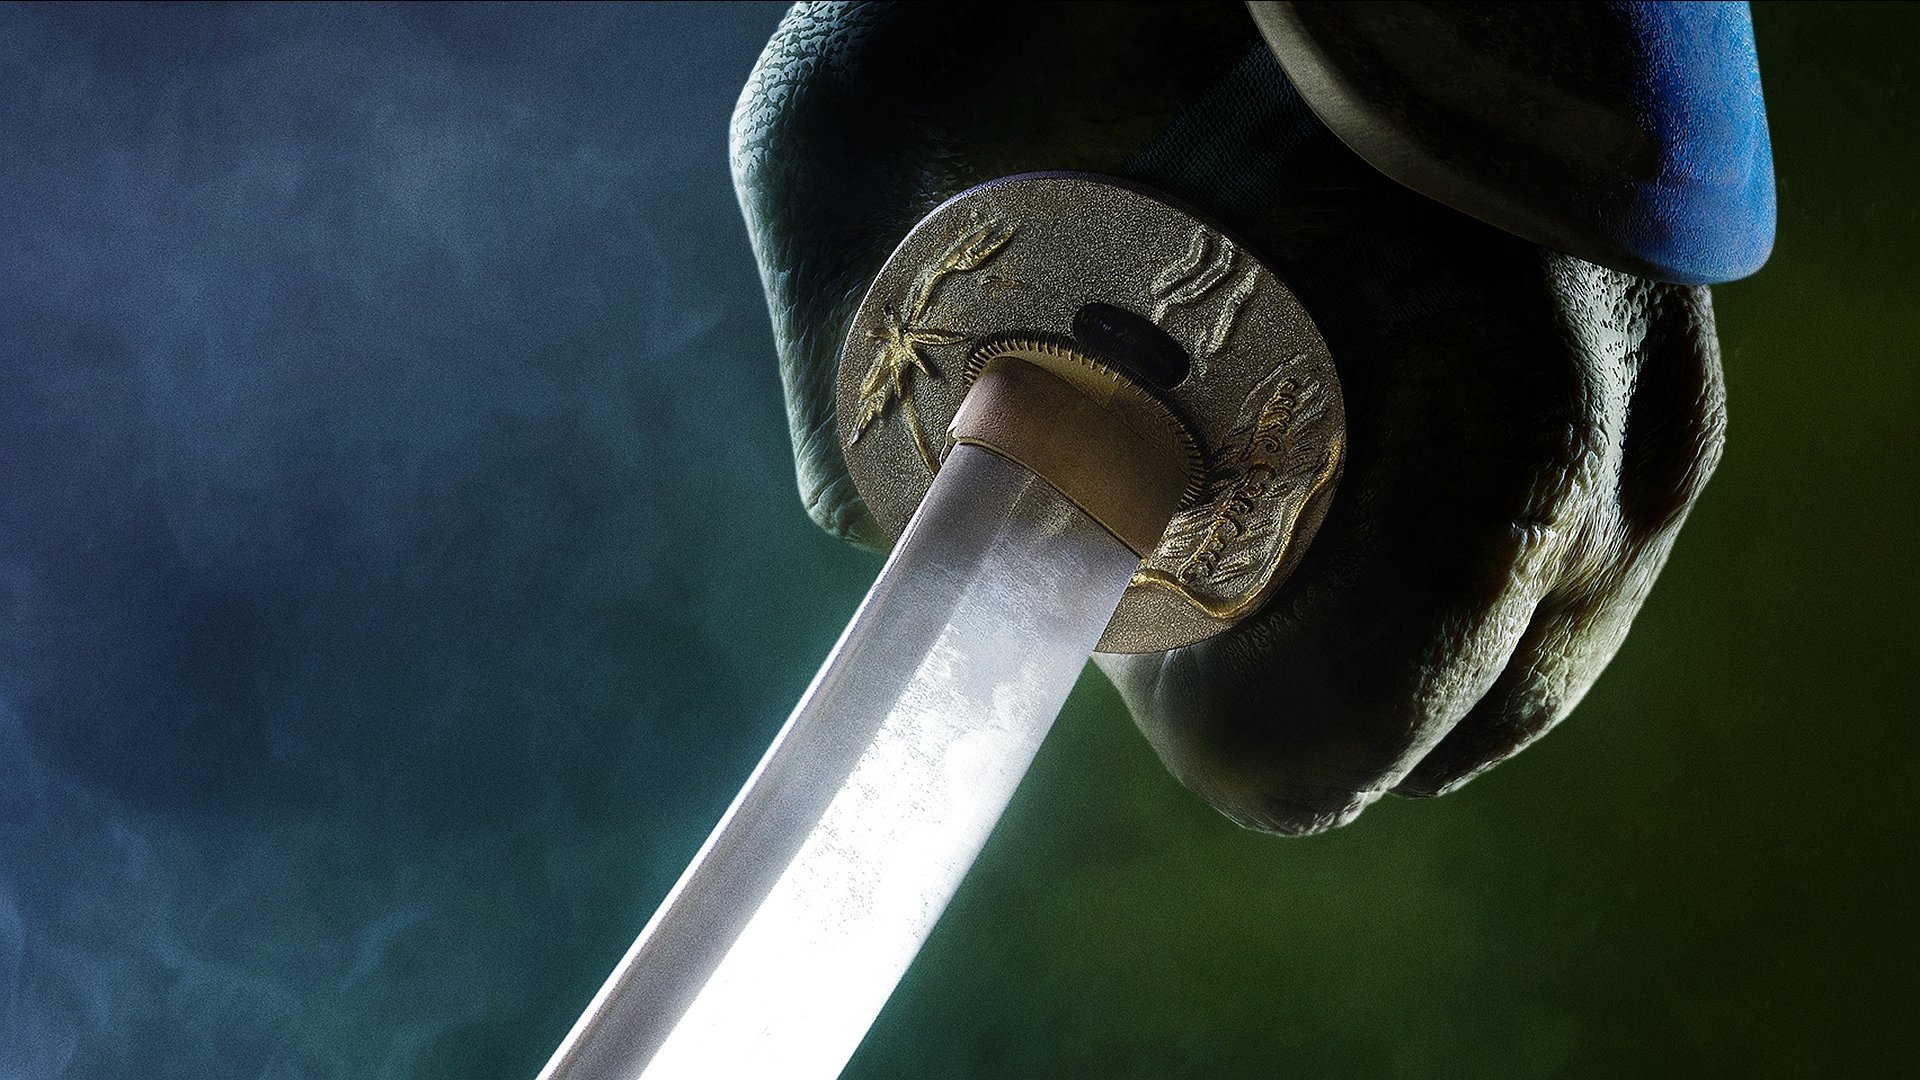 Free Teenage Mutant Ninja Turtles (2014) TMNT movie high quality wallpaper ID:234186 for hd 1080p desktop